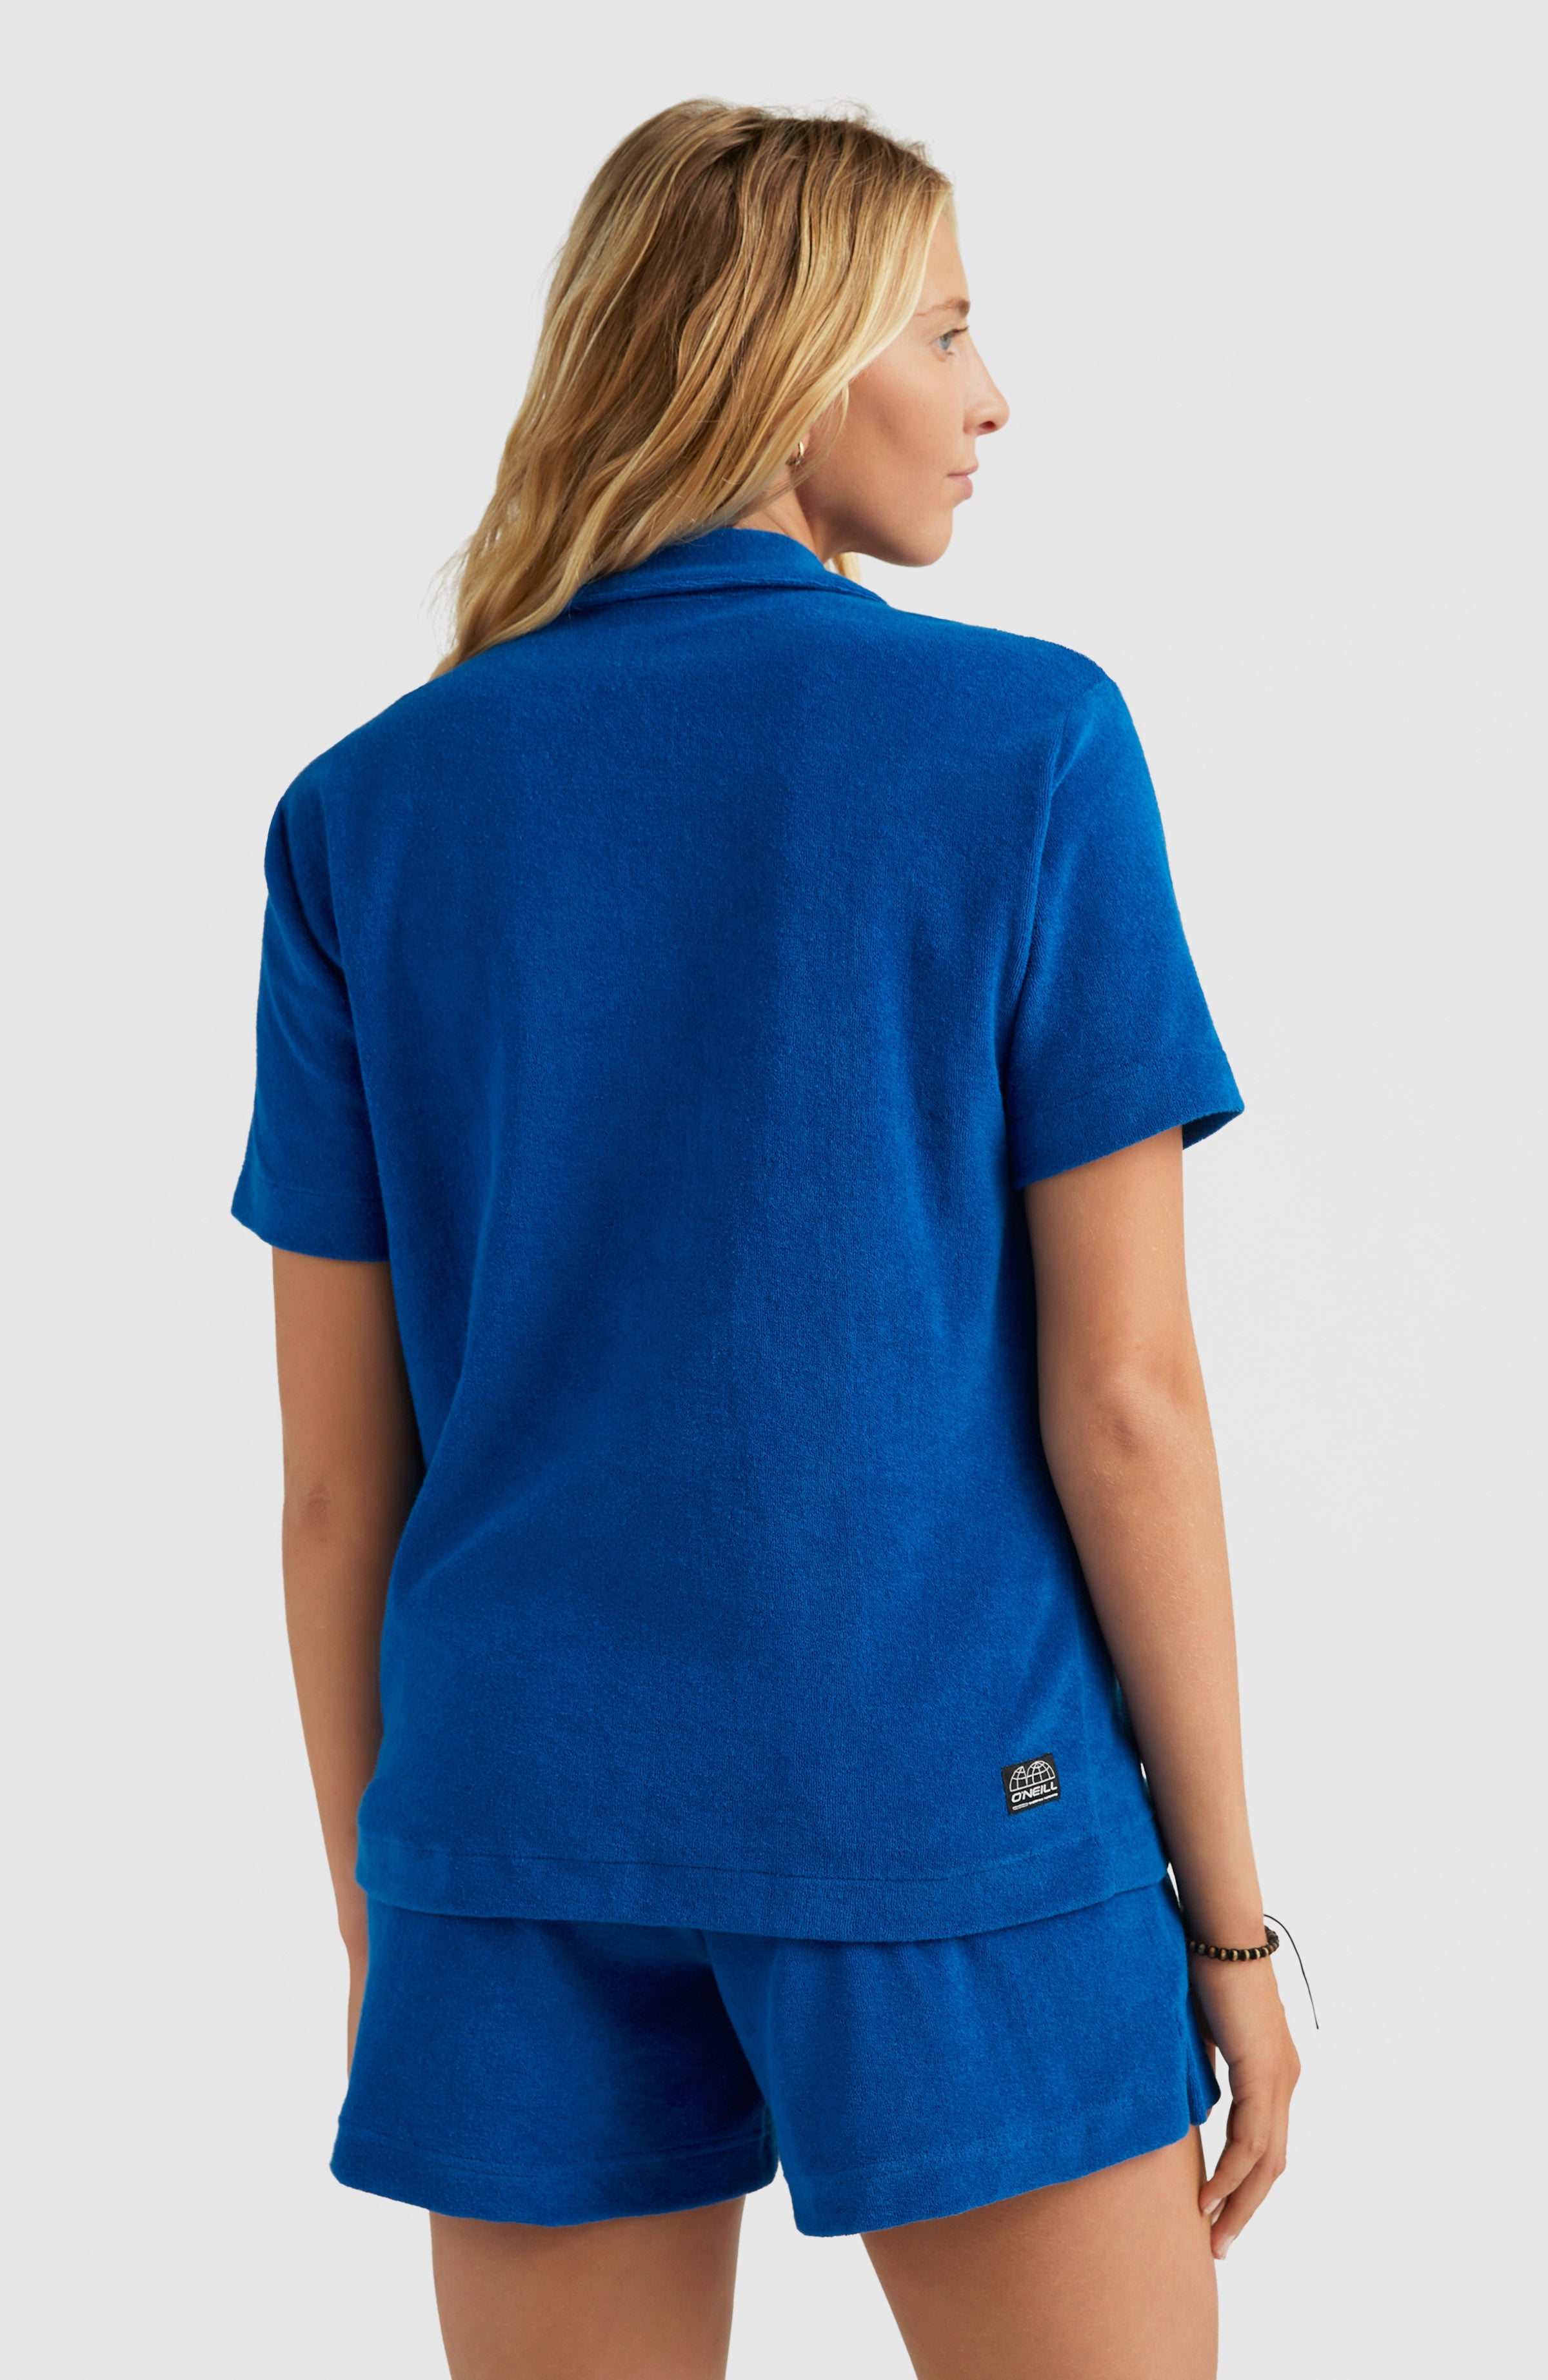 Buy Curwish SBB-01B Beautiful Basis Royal Blue with Lace T-Shirt